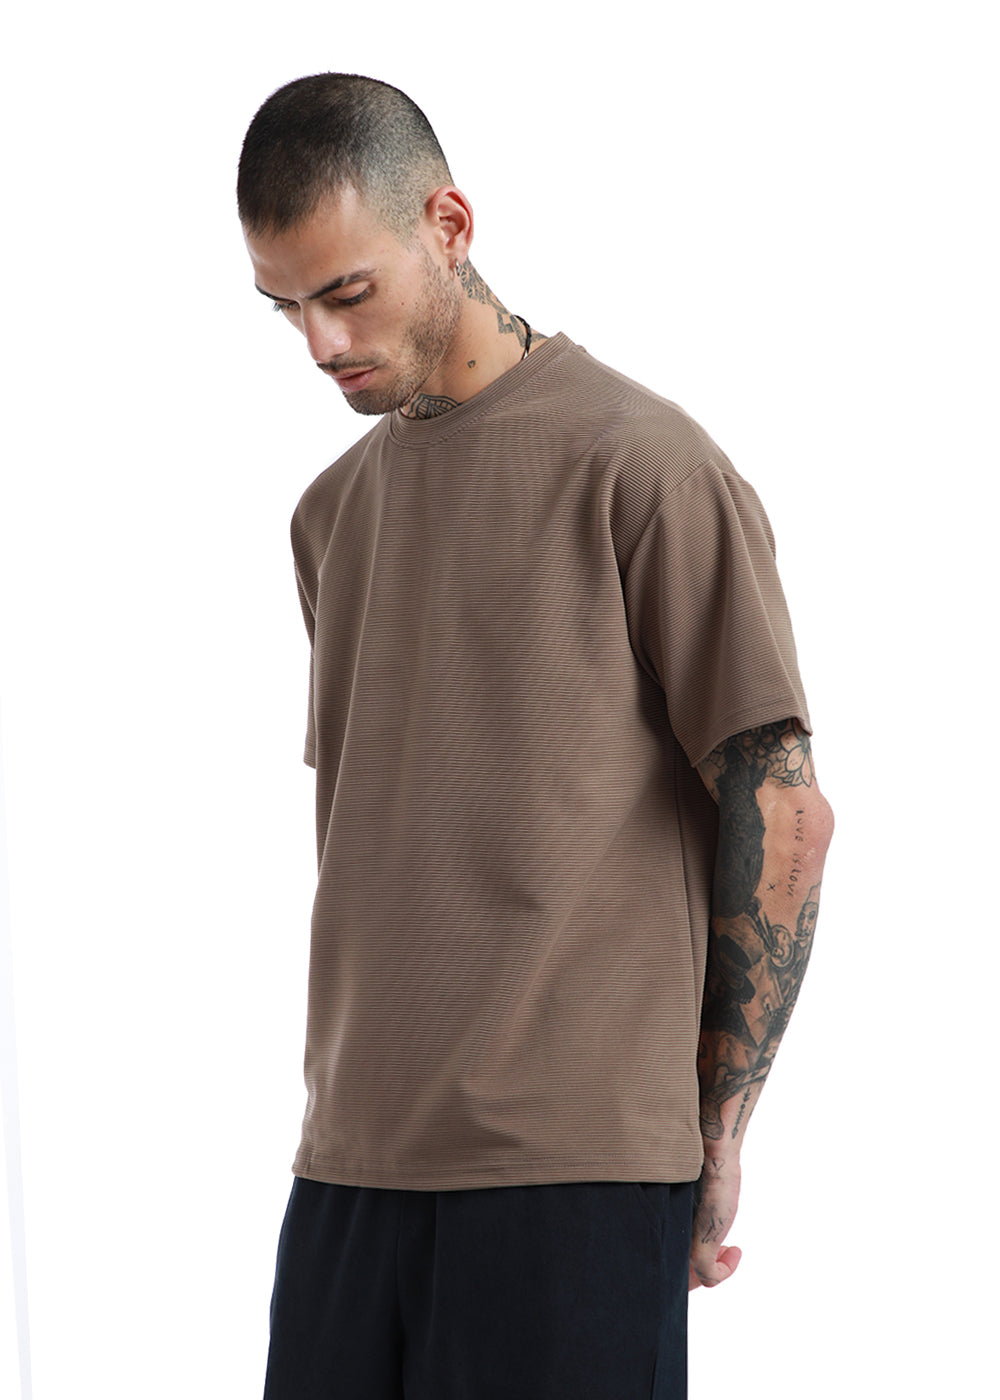 Oversized Tan Brown Textured T-shirt